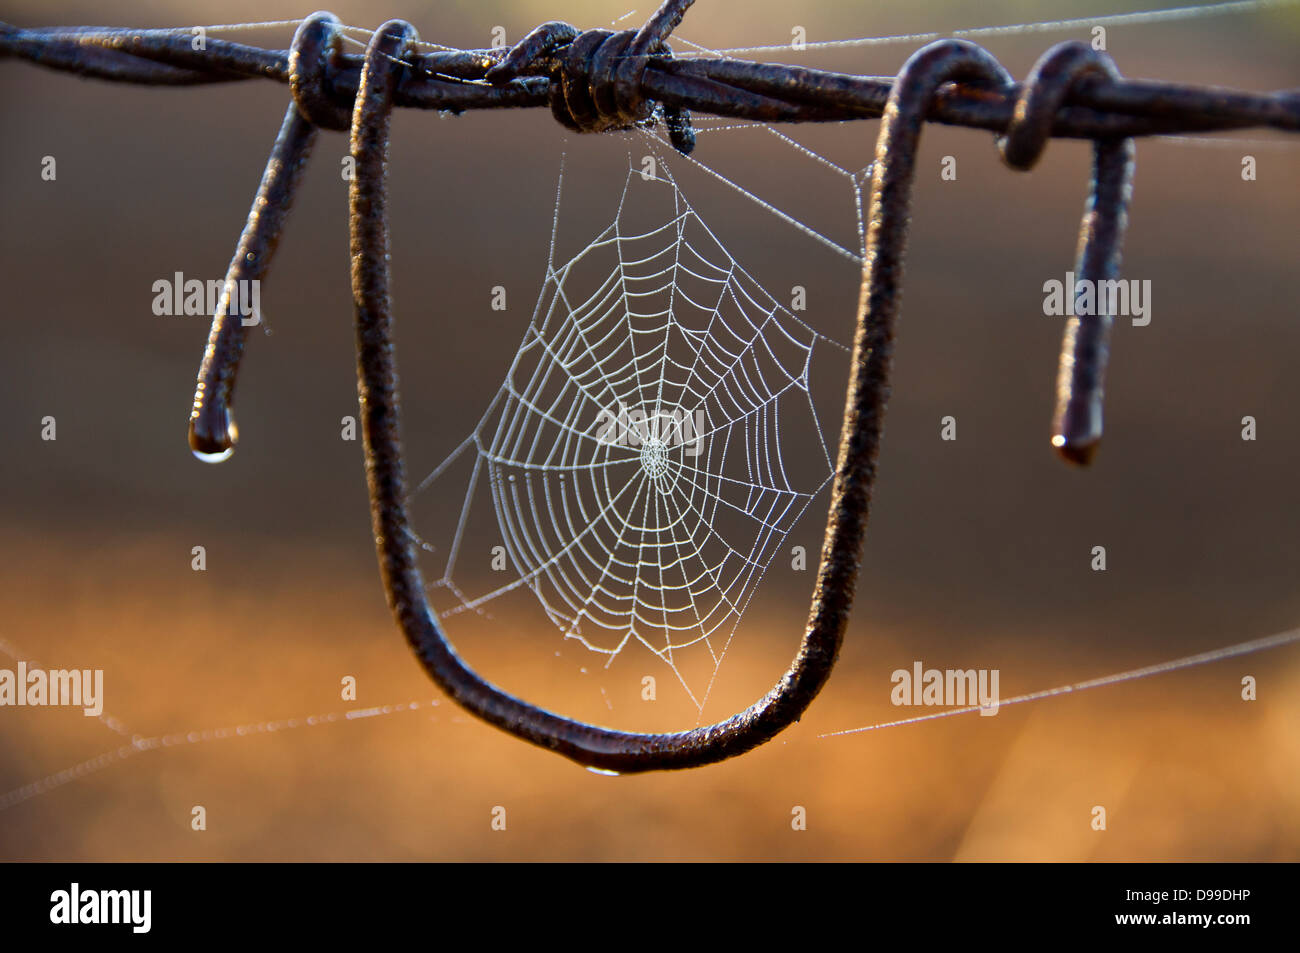 Spiderweb on wire fence Stock Photo - Alamy